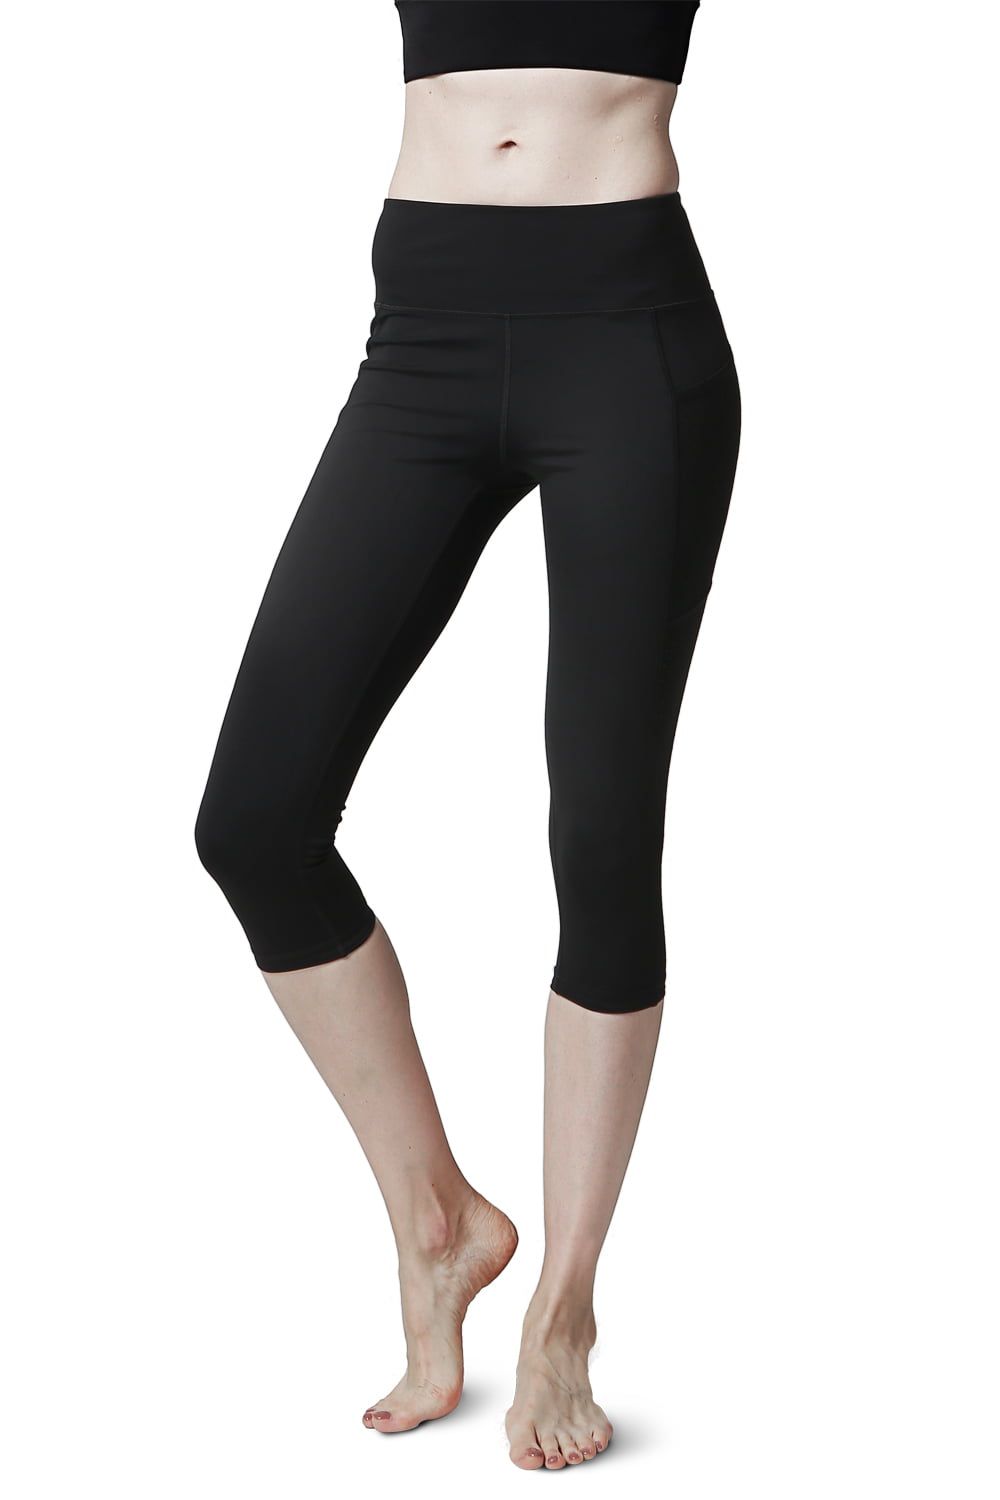 NELEUS Women's Tummy Control High Waist Capri Running Leggings Yoga Pants  with Pocket